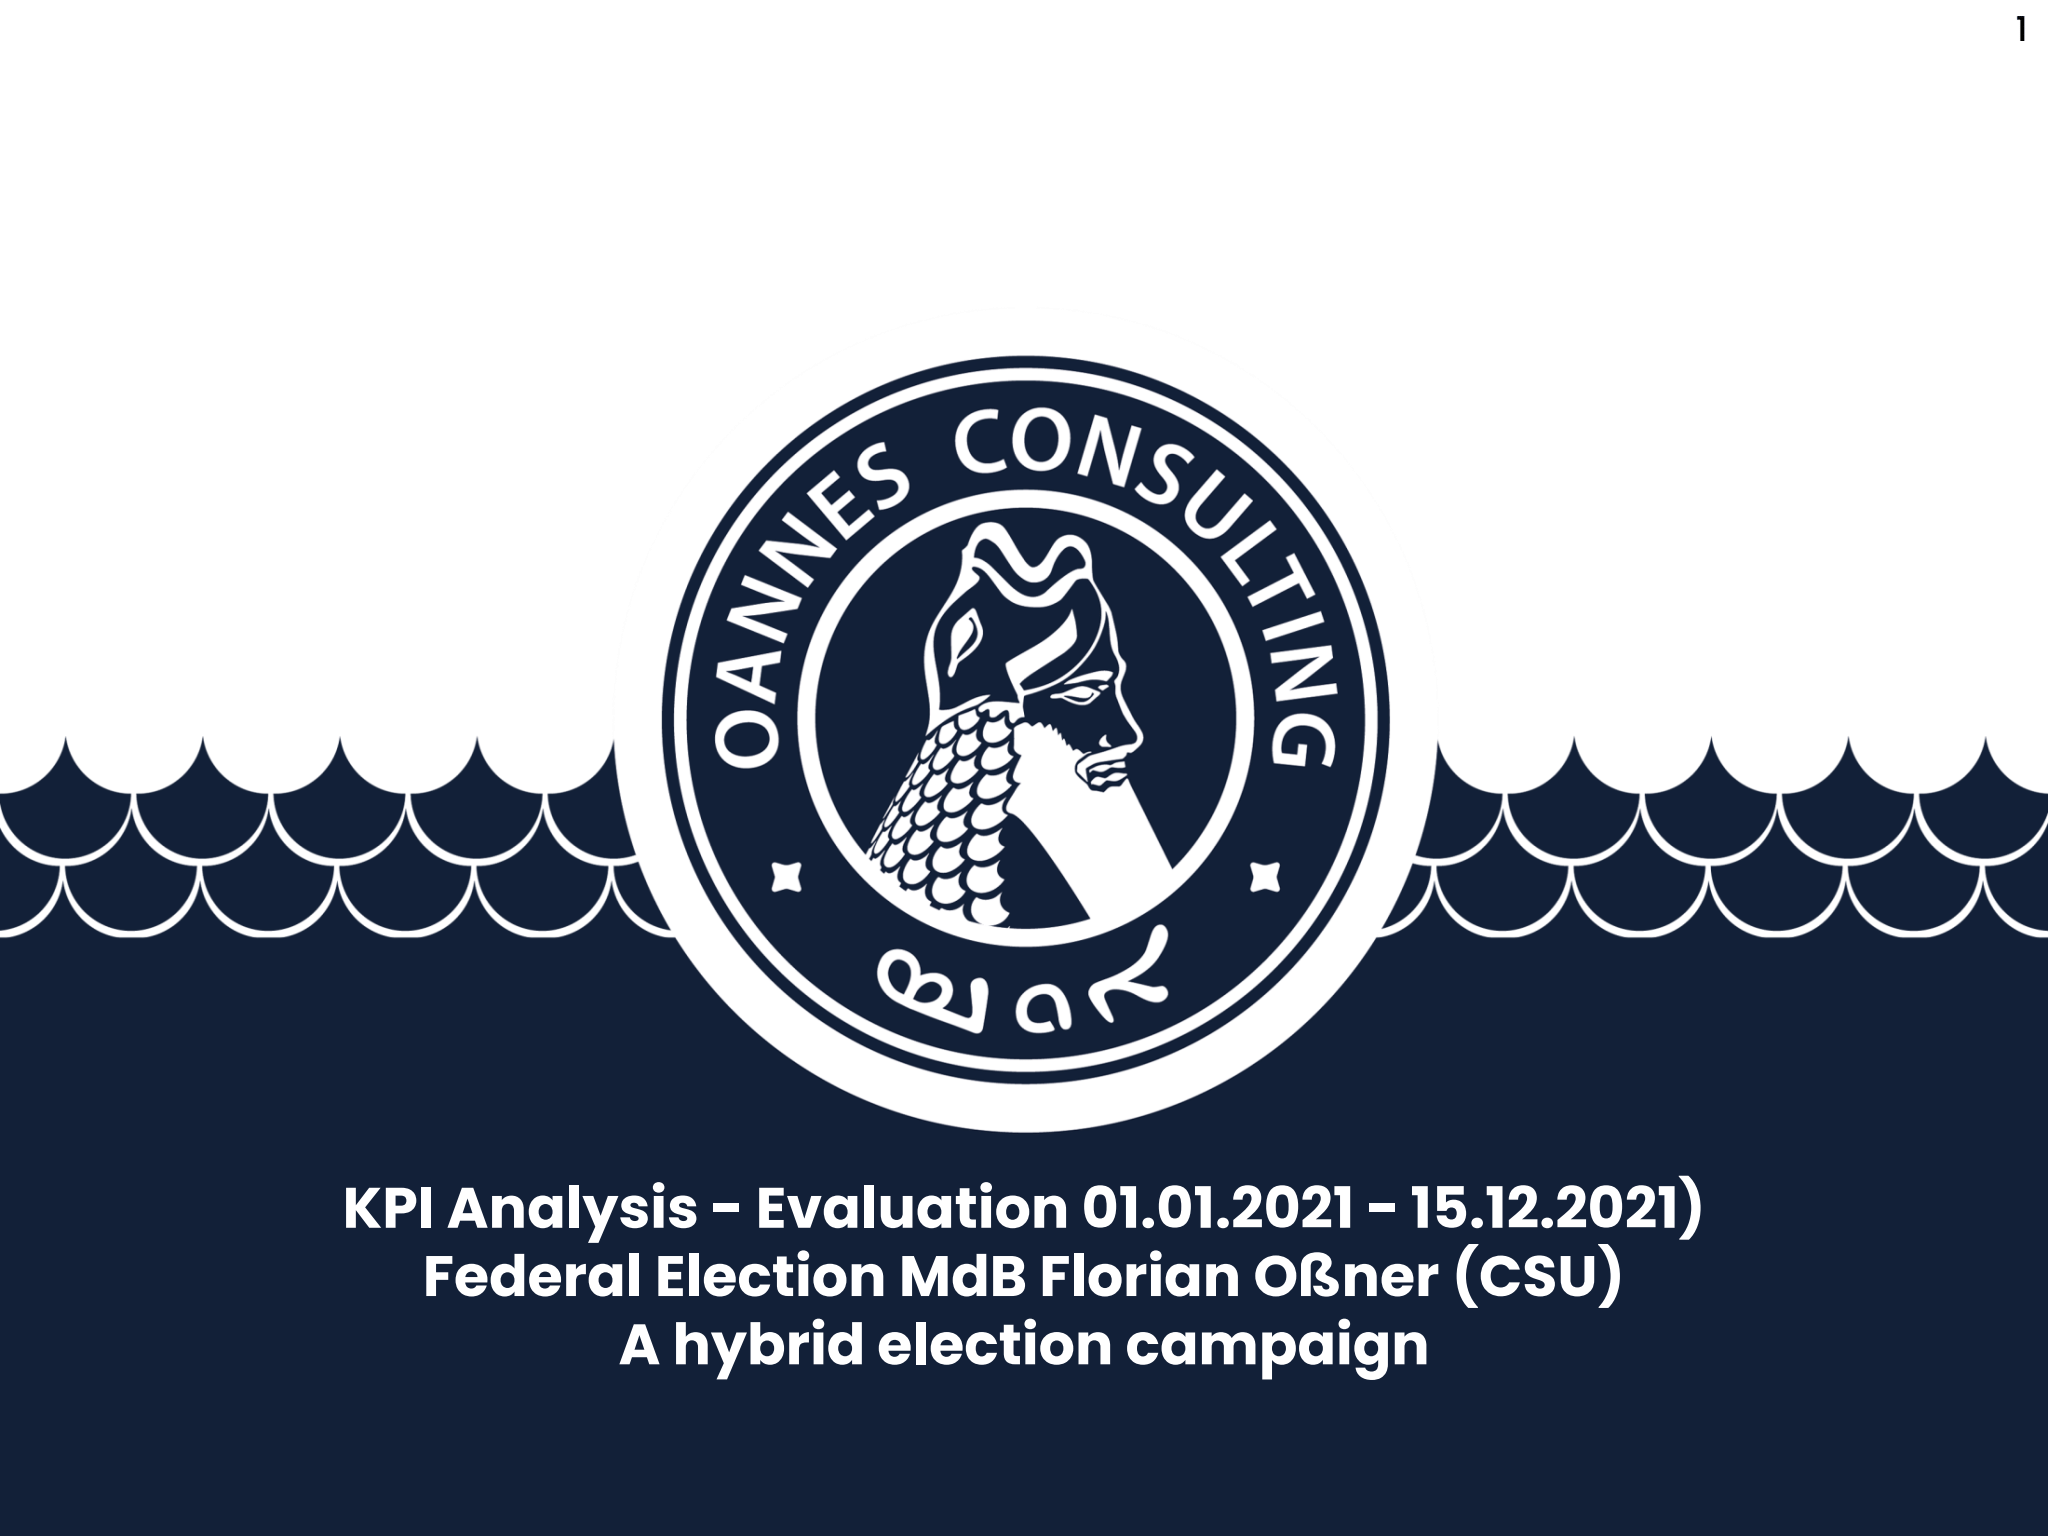 KPI Analysis - Evaluation 01.01.2021 - 15.12.2021